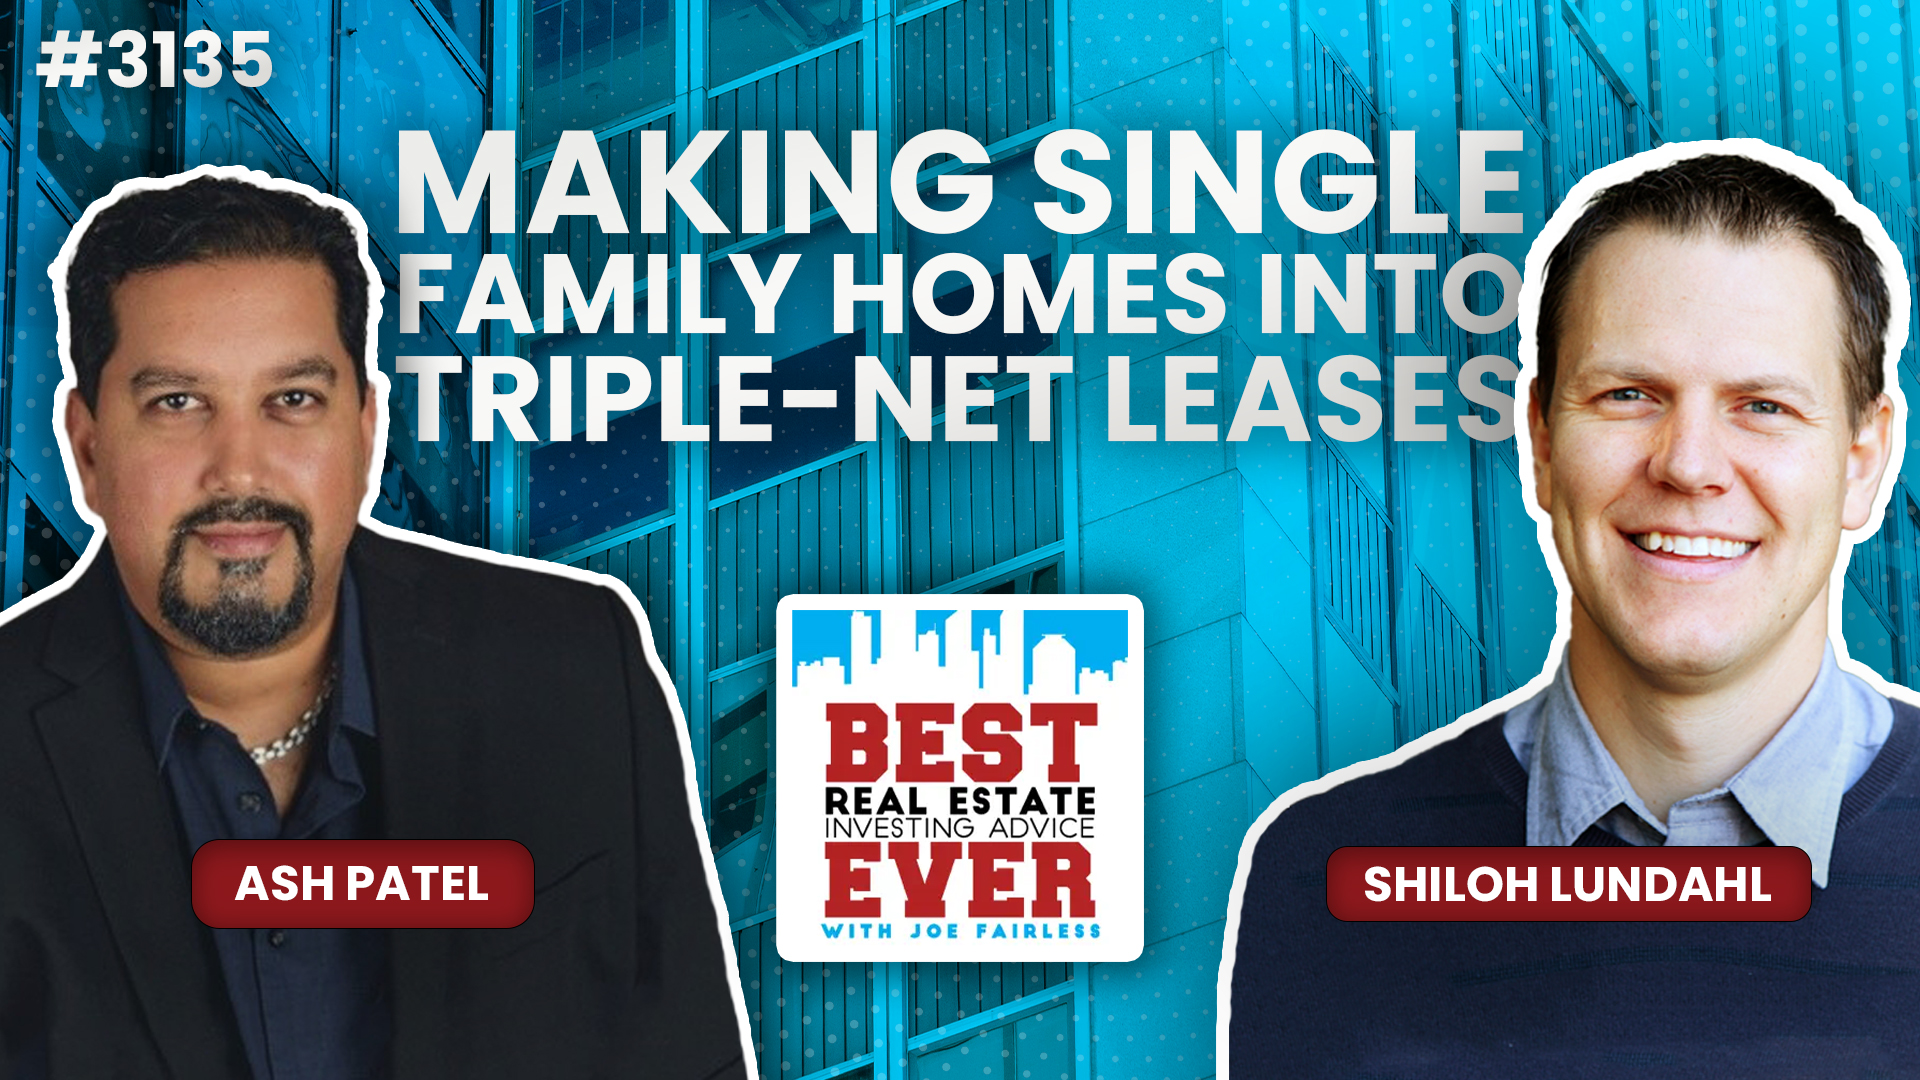 JF3135: Making Single-Family Homes into Triple-Net Leases ft. Shiloh Lundahl